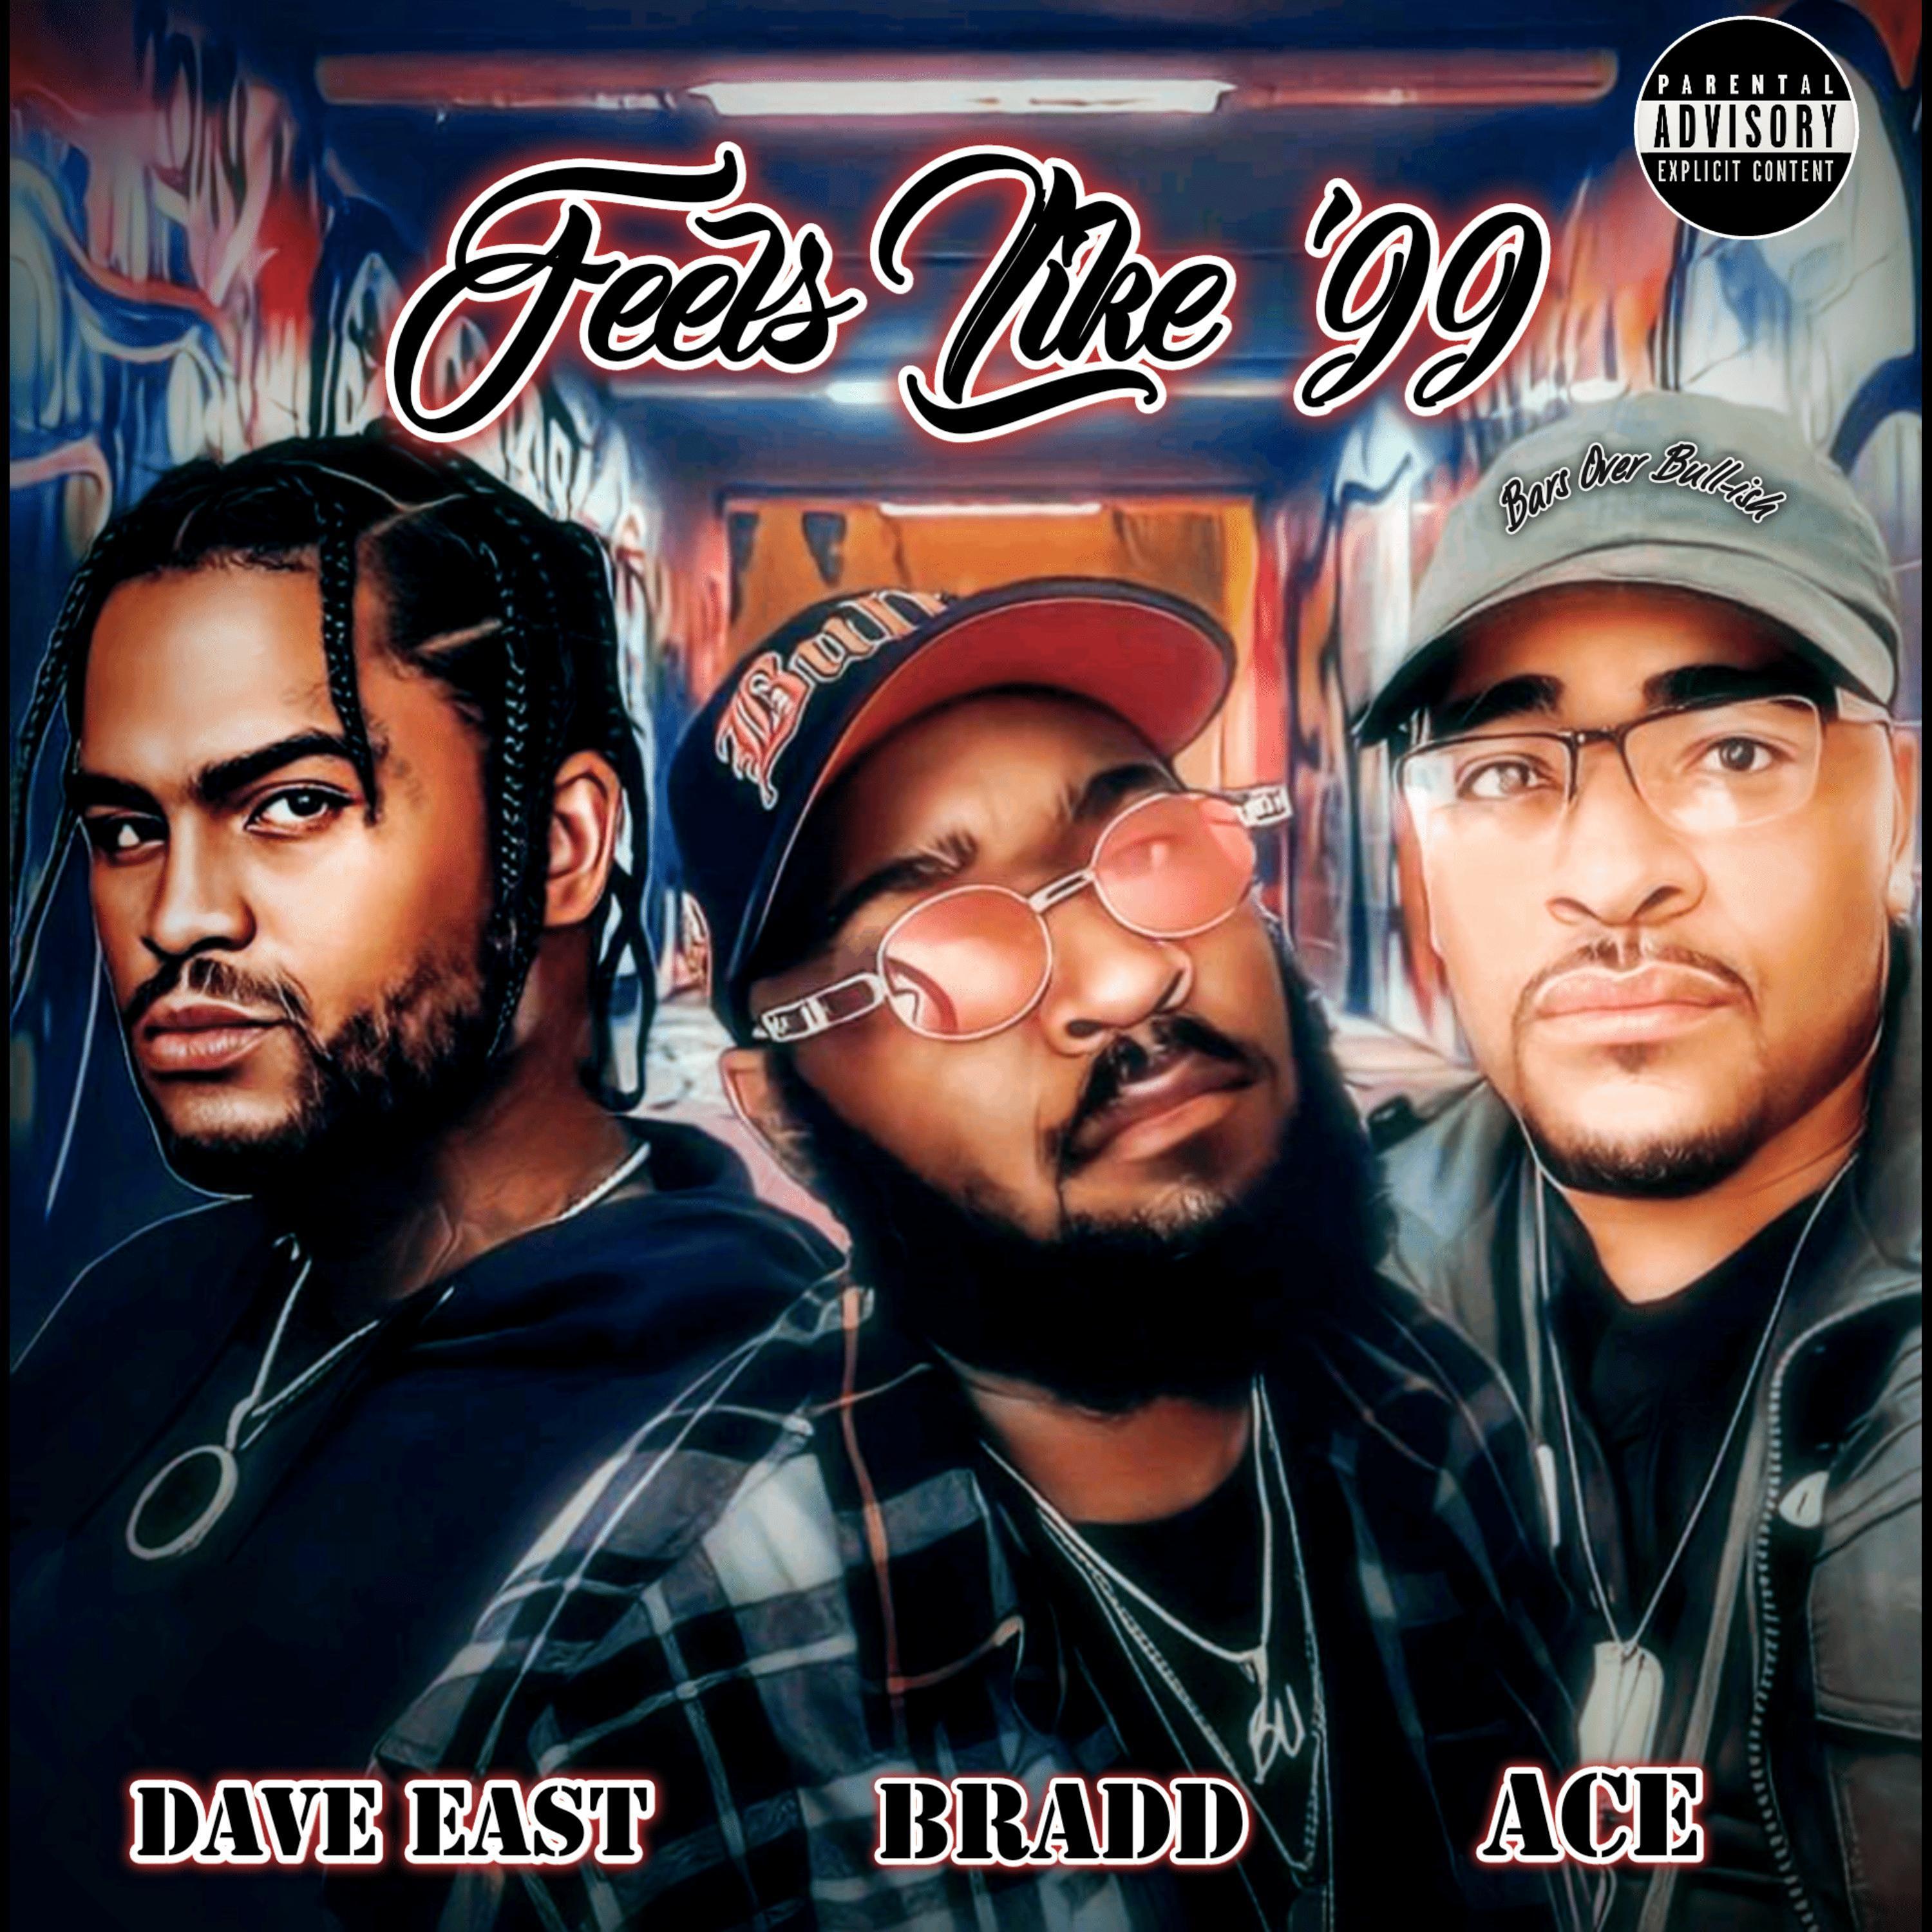 Bradd - Feels Like '99 (feat. Dave East & ACE)